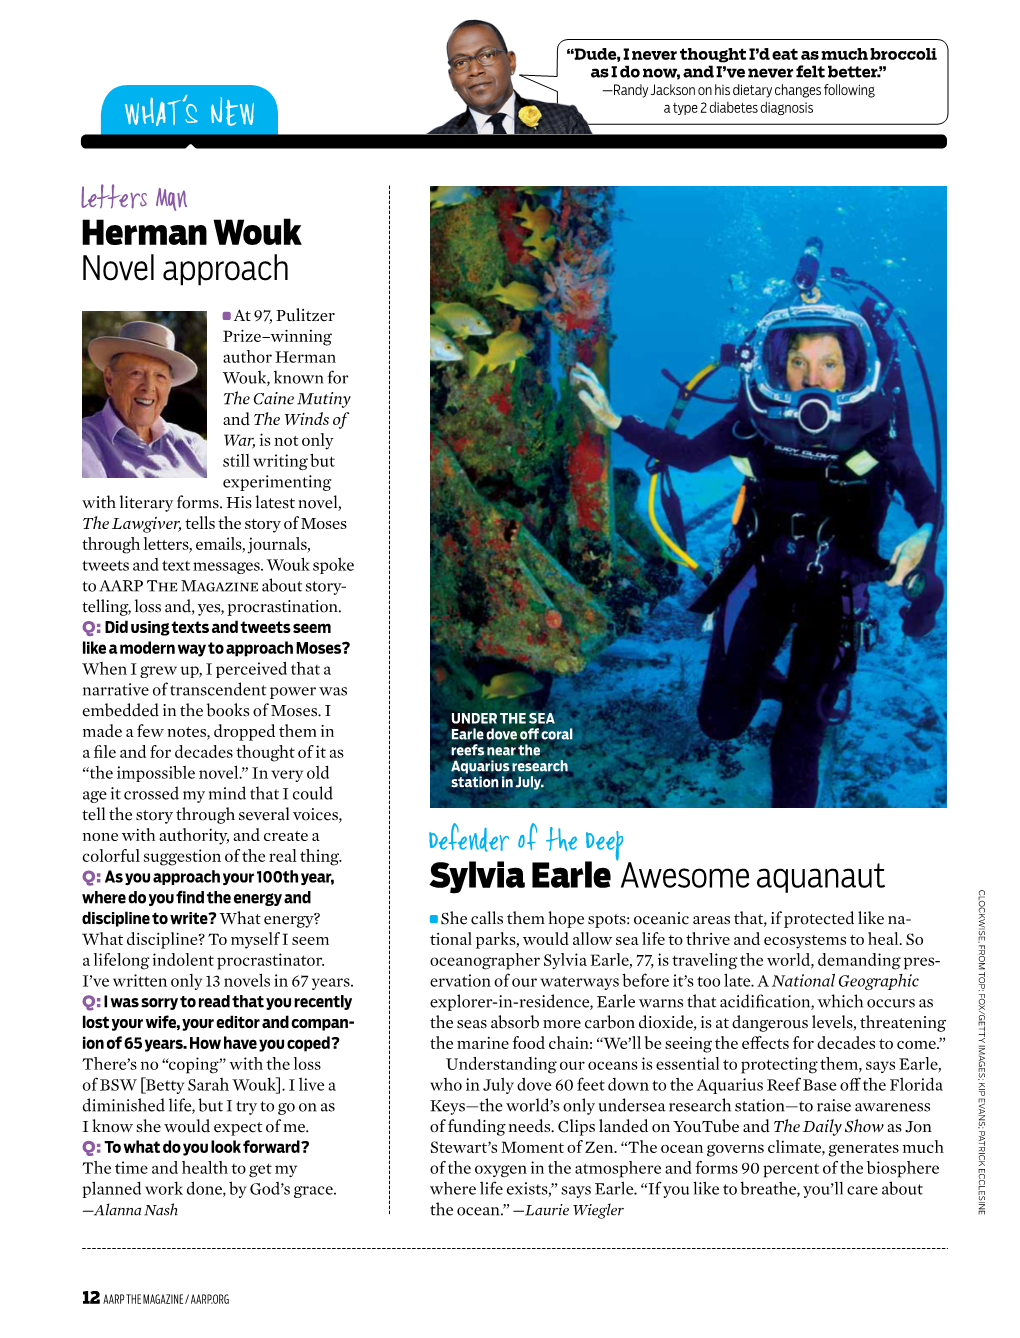 Sylvia Earle Awesome Aquanaut Herman Wouk Novel Approach